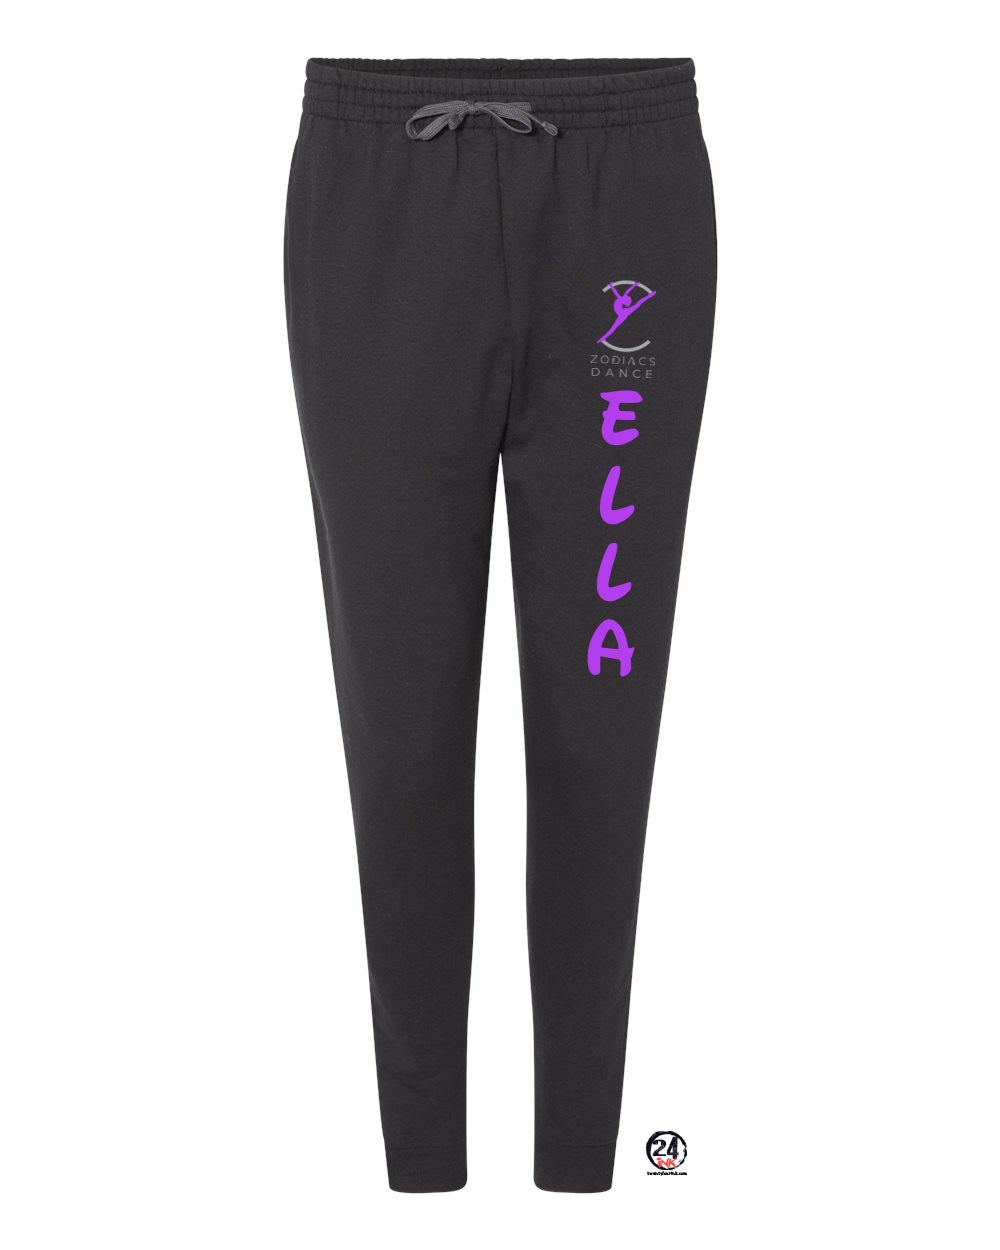 Zodiac Dance Personalized Sweatpants